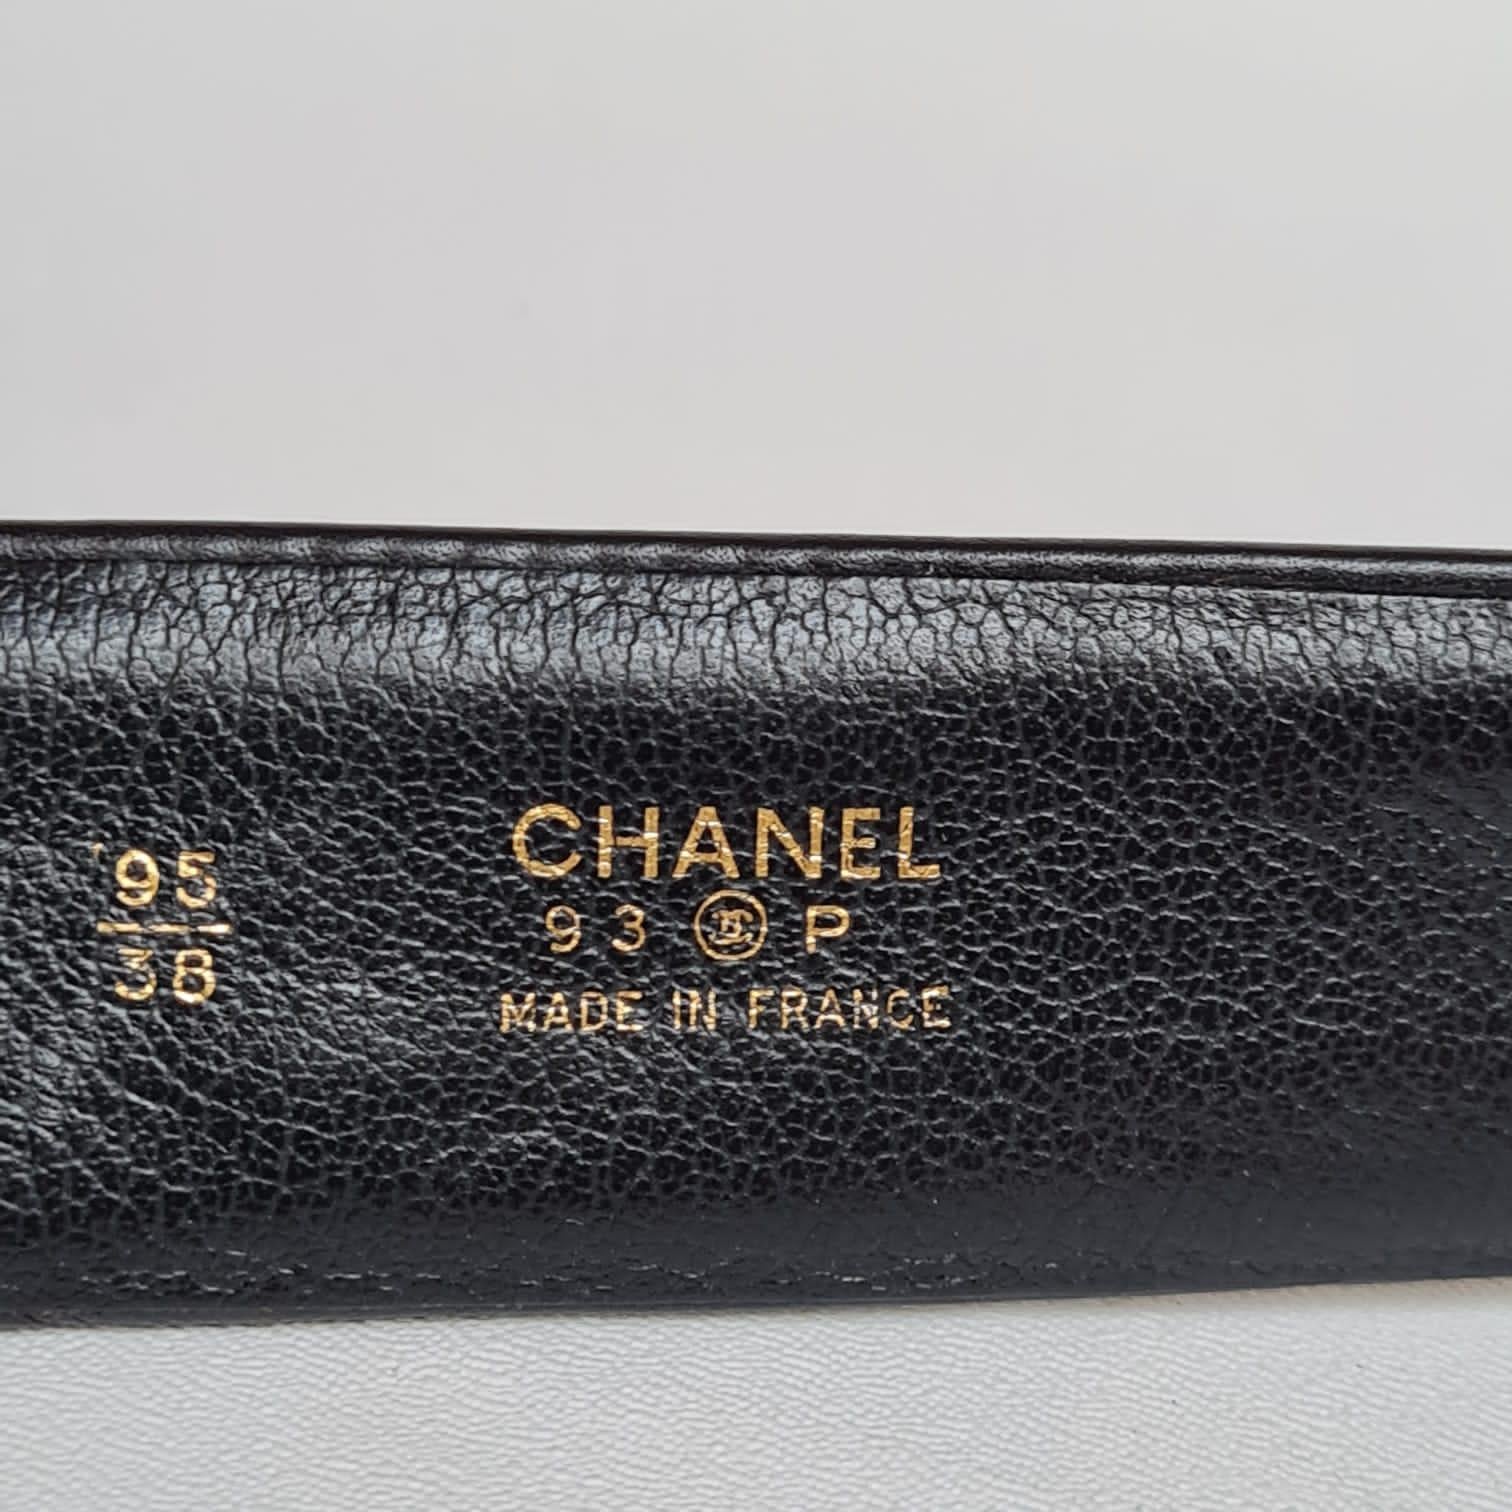 1993 Chanel Vintage Quilted Leather Belt For Sale 1